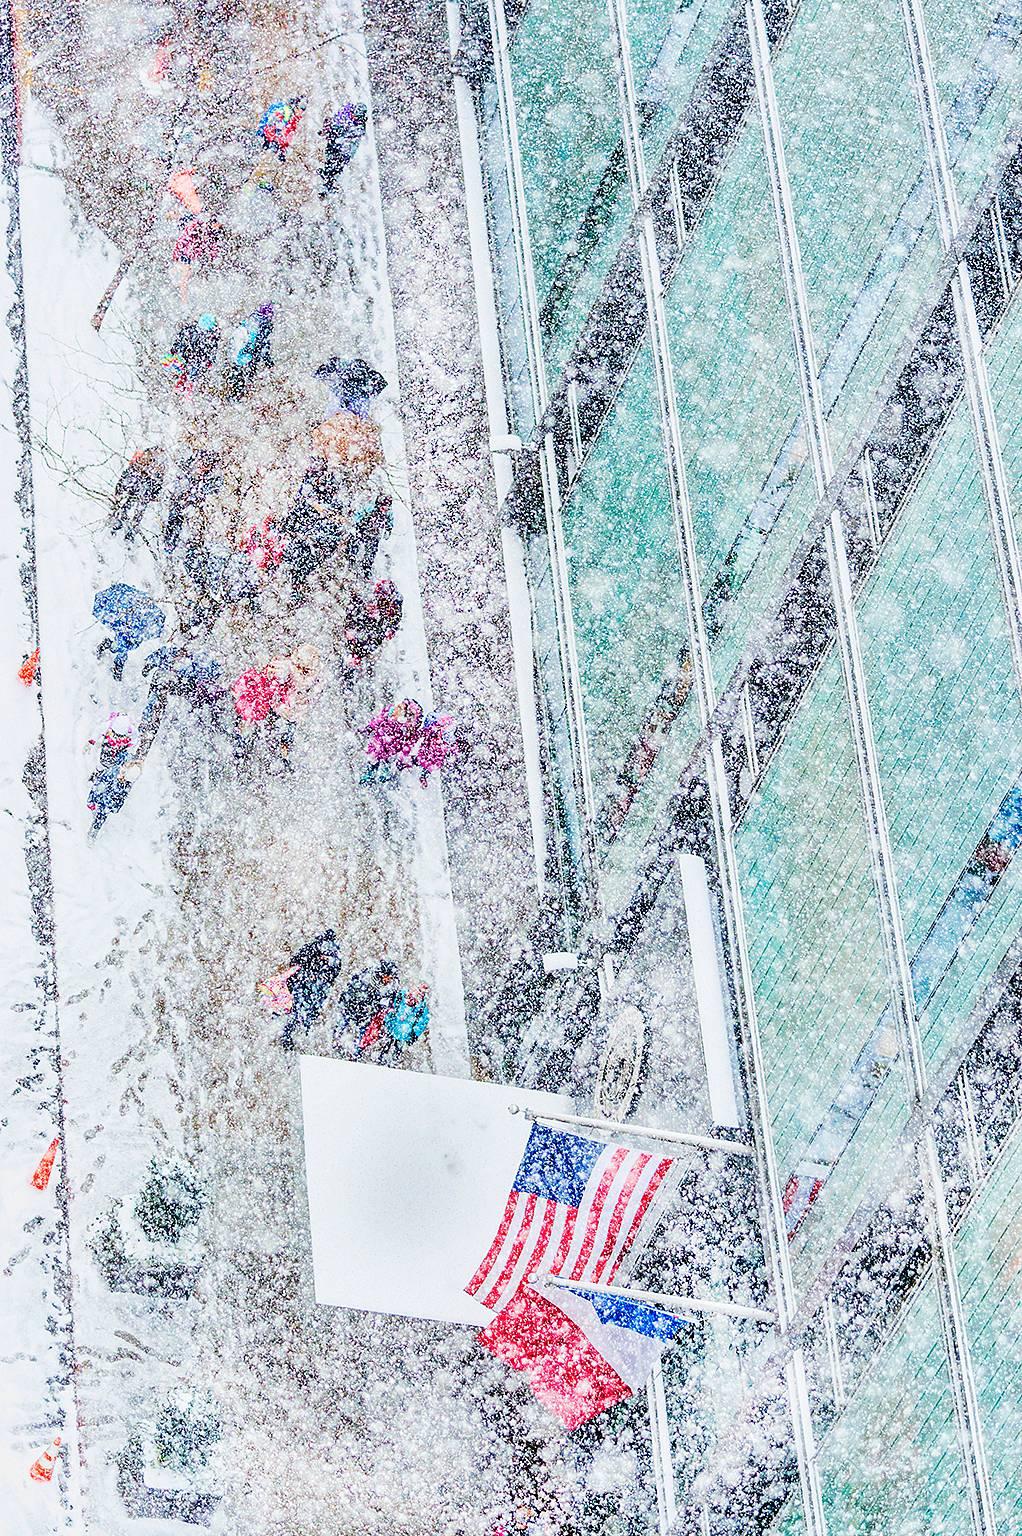 New York City Snow Scene with American Flag